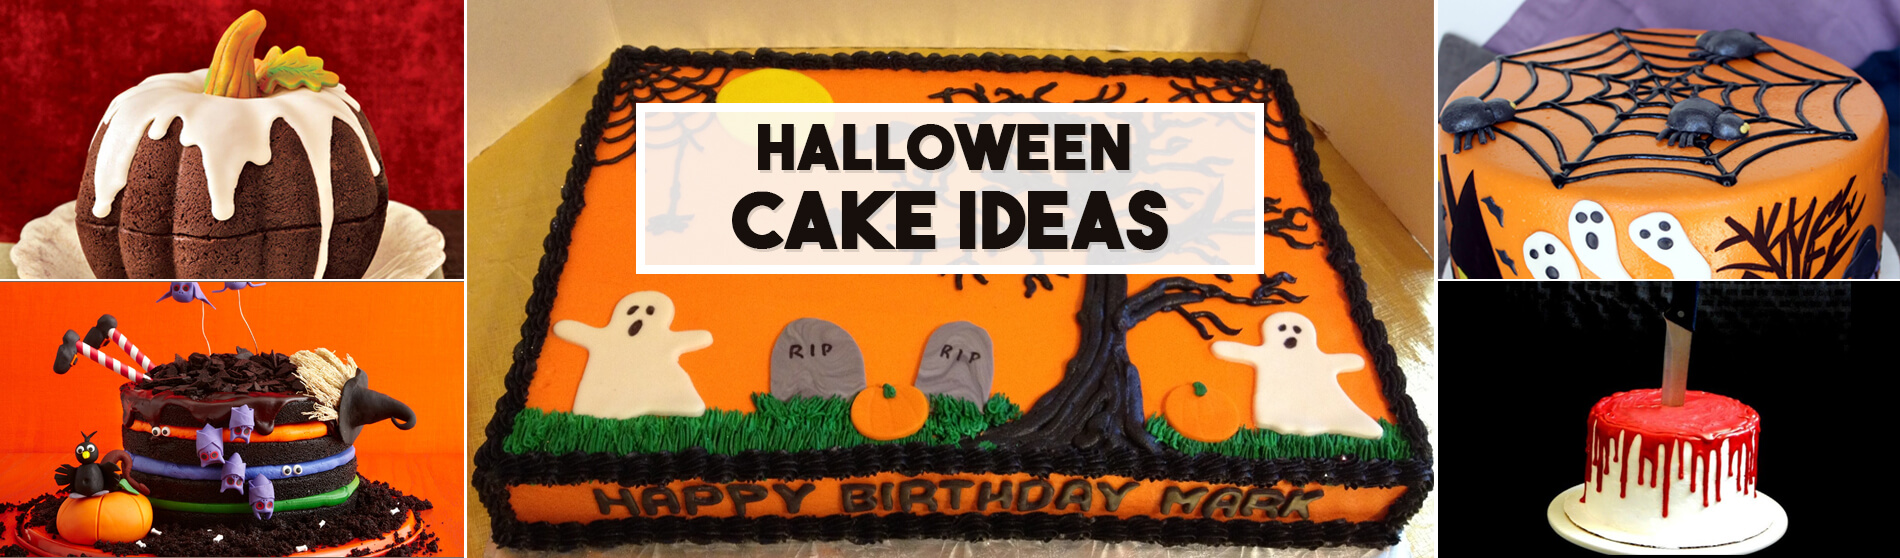 Glendale Halloween : Halloween-Cake-Ideas